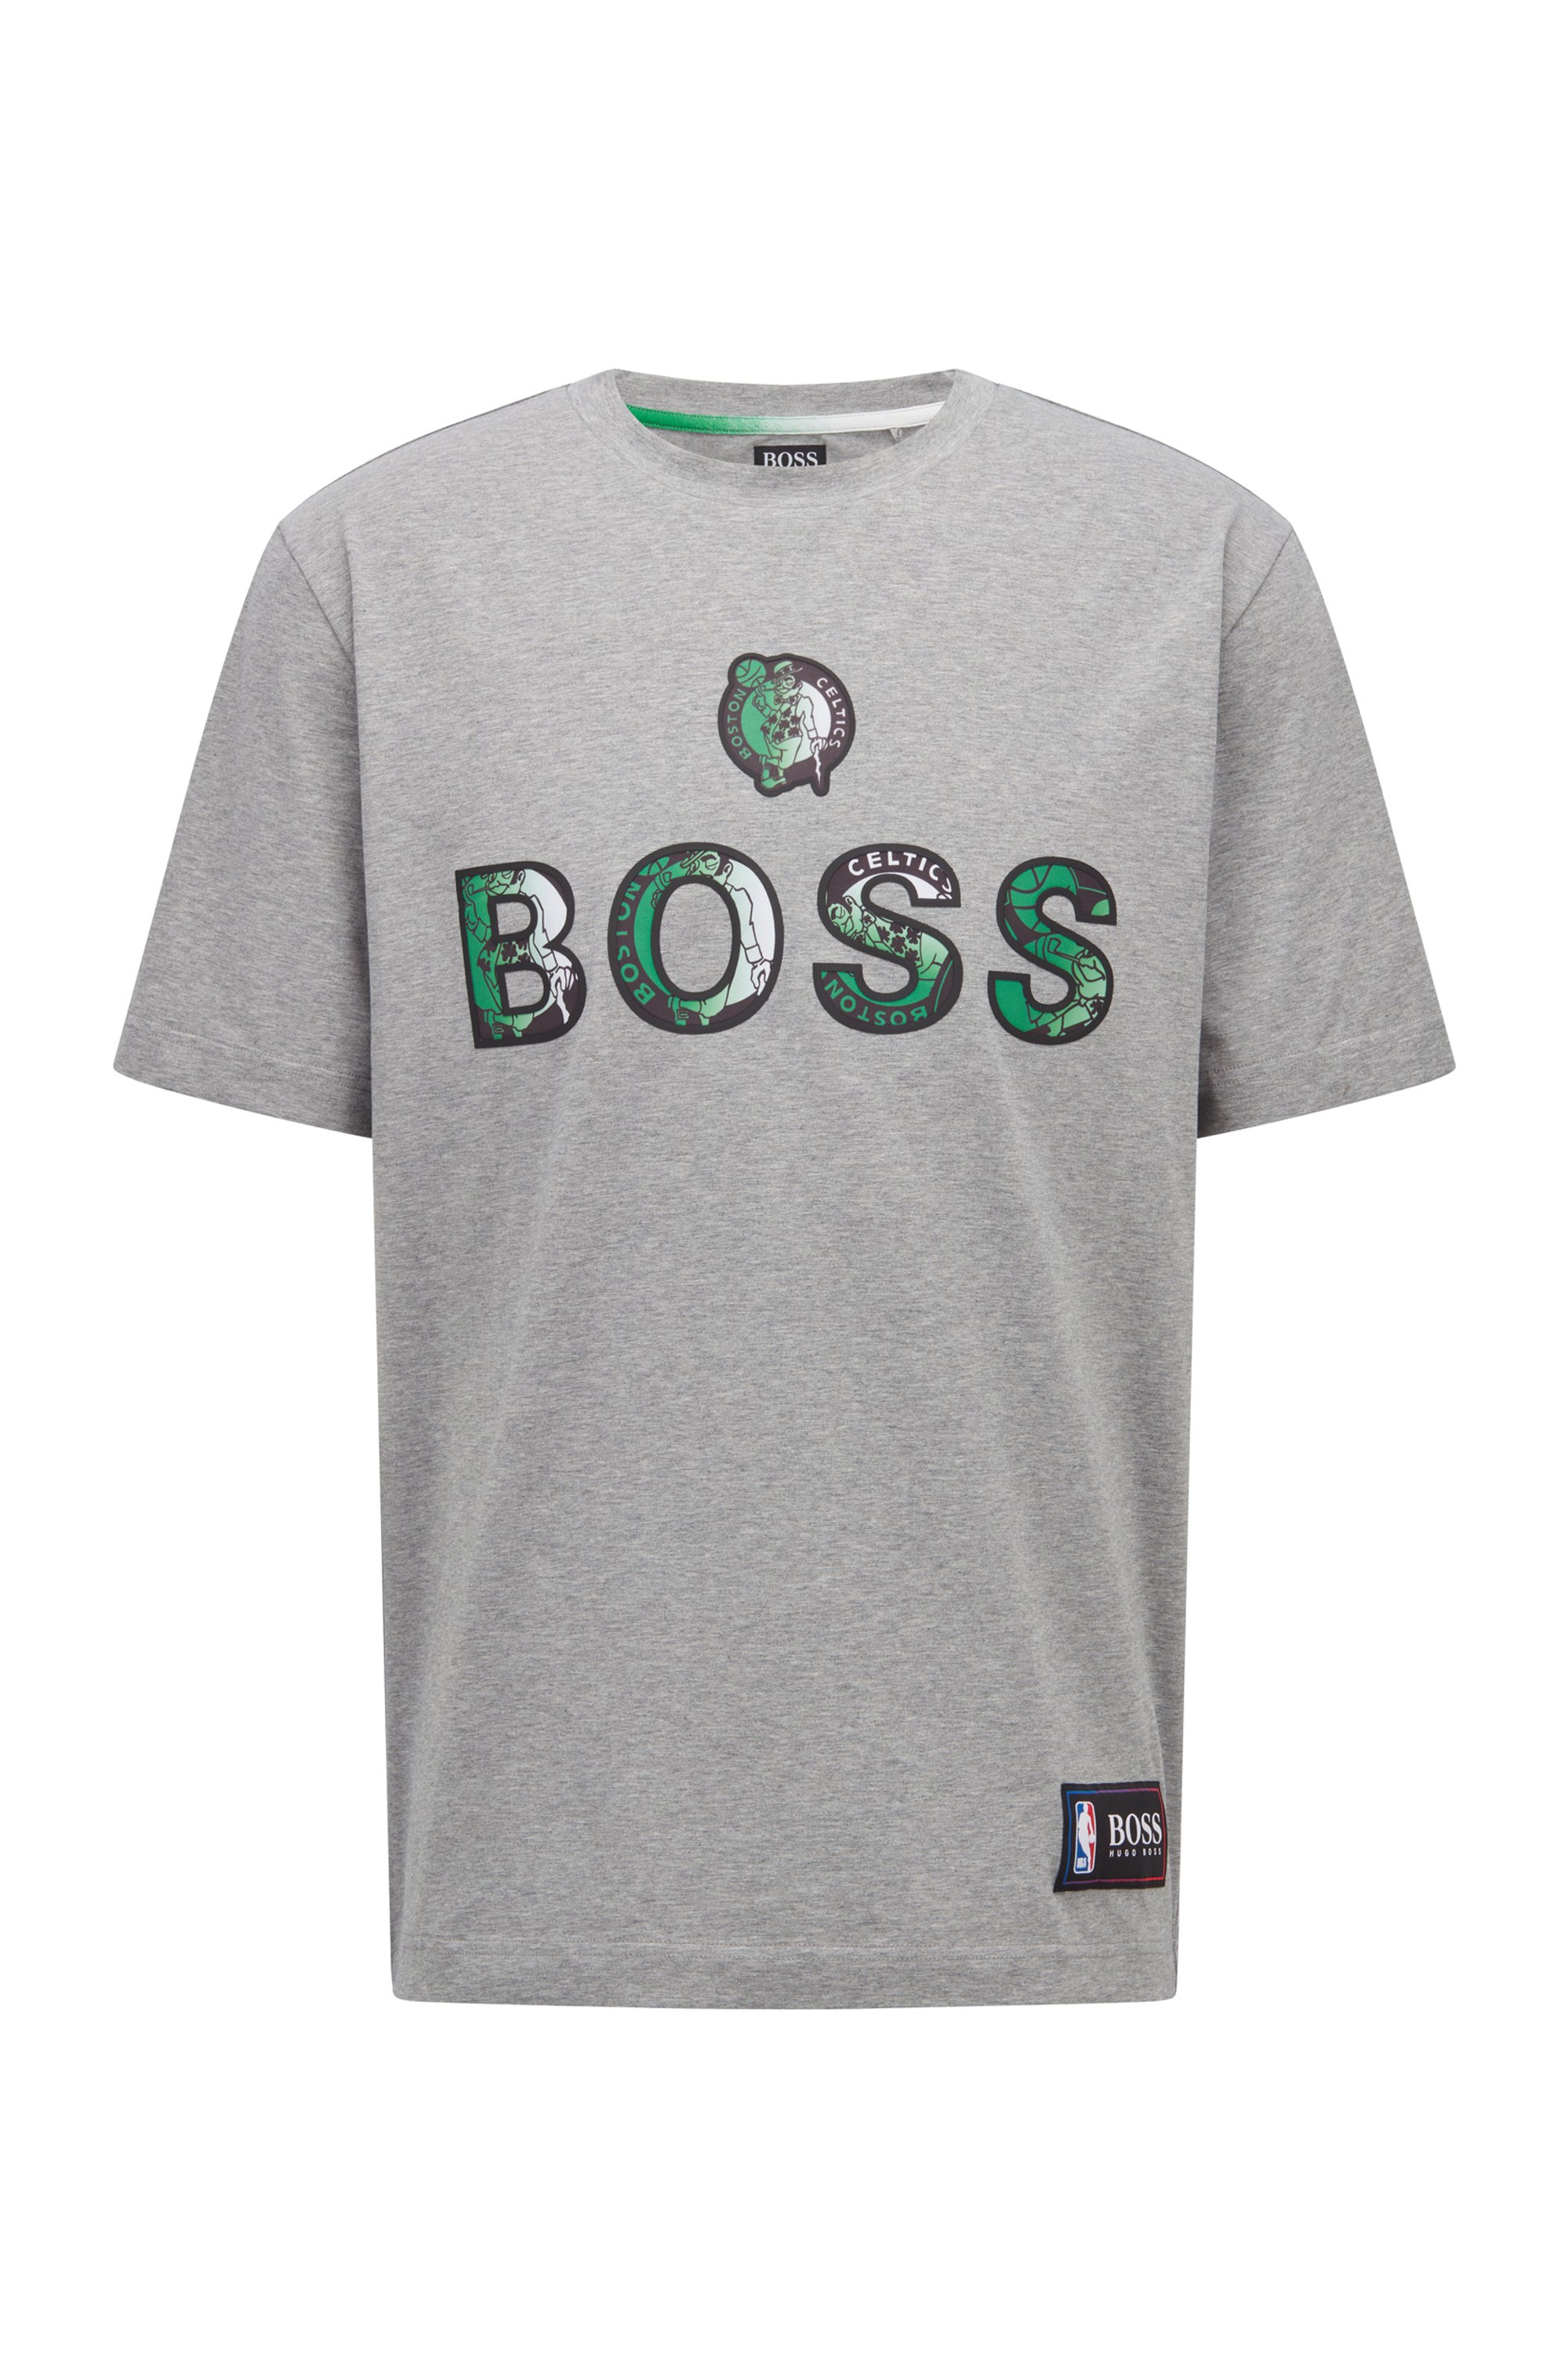 BOSS x NBA stretch-cotton T-shirt with colorful branding, NBA CELTICS